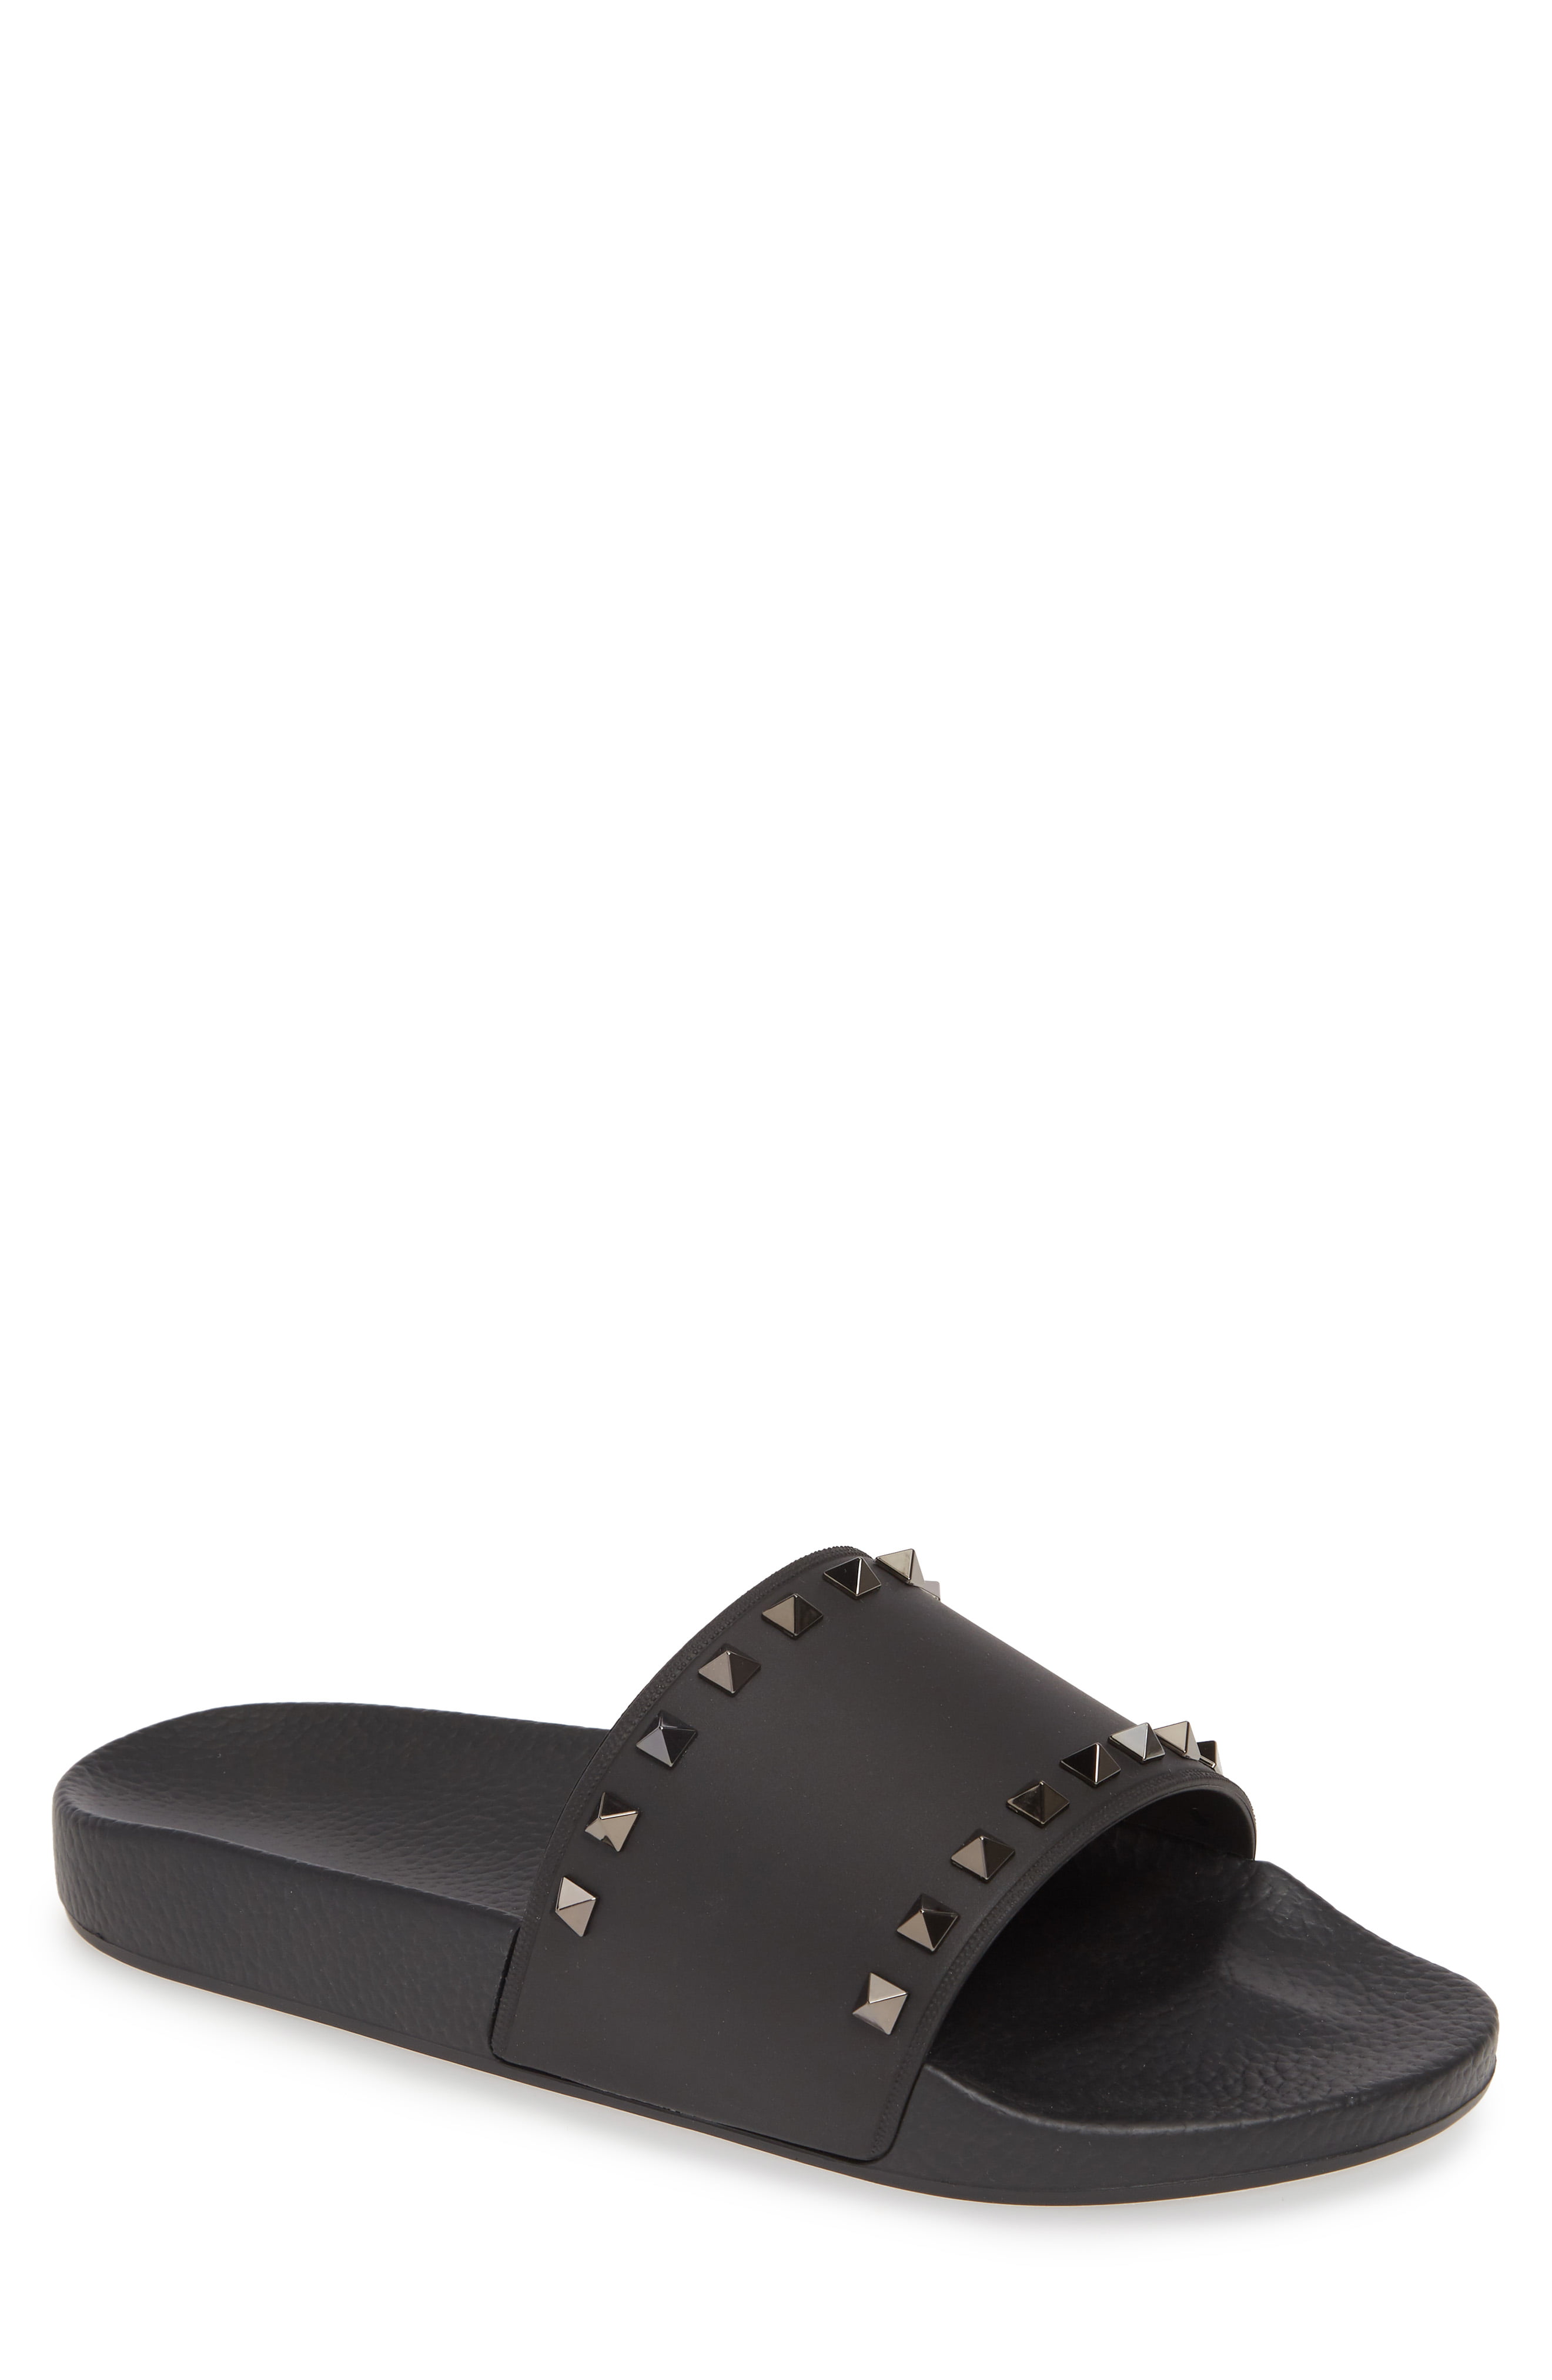 Men’s Valentino Garavani Rockstud Slide Sandal, Size 9US / 42EU – Black ...